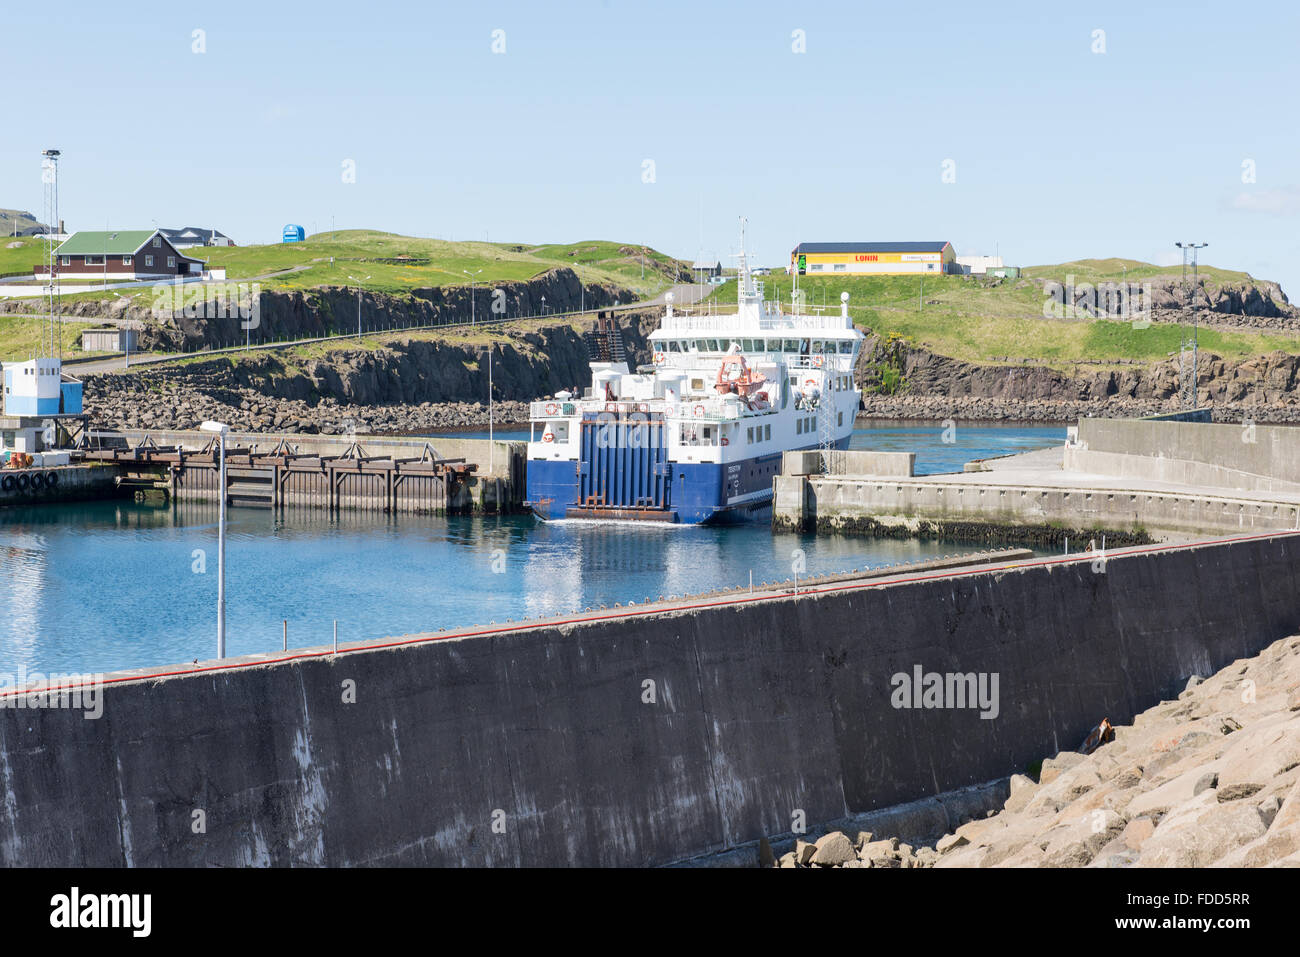 Strandfaraskip landsins teistin di traghetto sulla rotta tra streymoy e sandoy sulle isole Faerøer Foto Stock